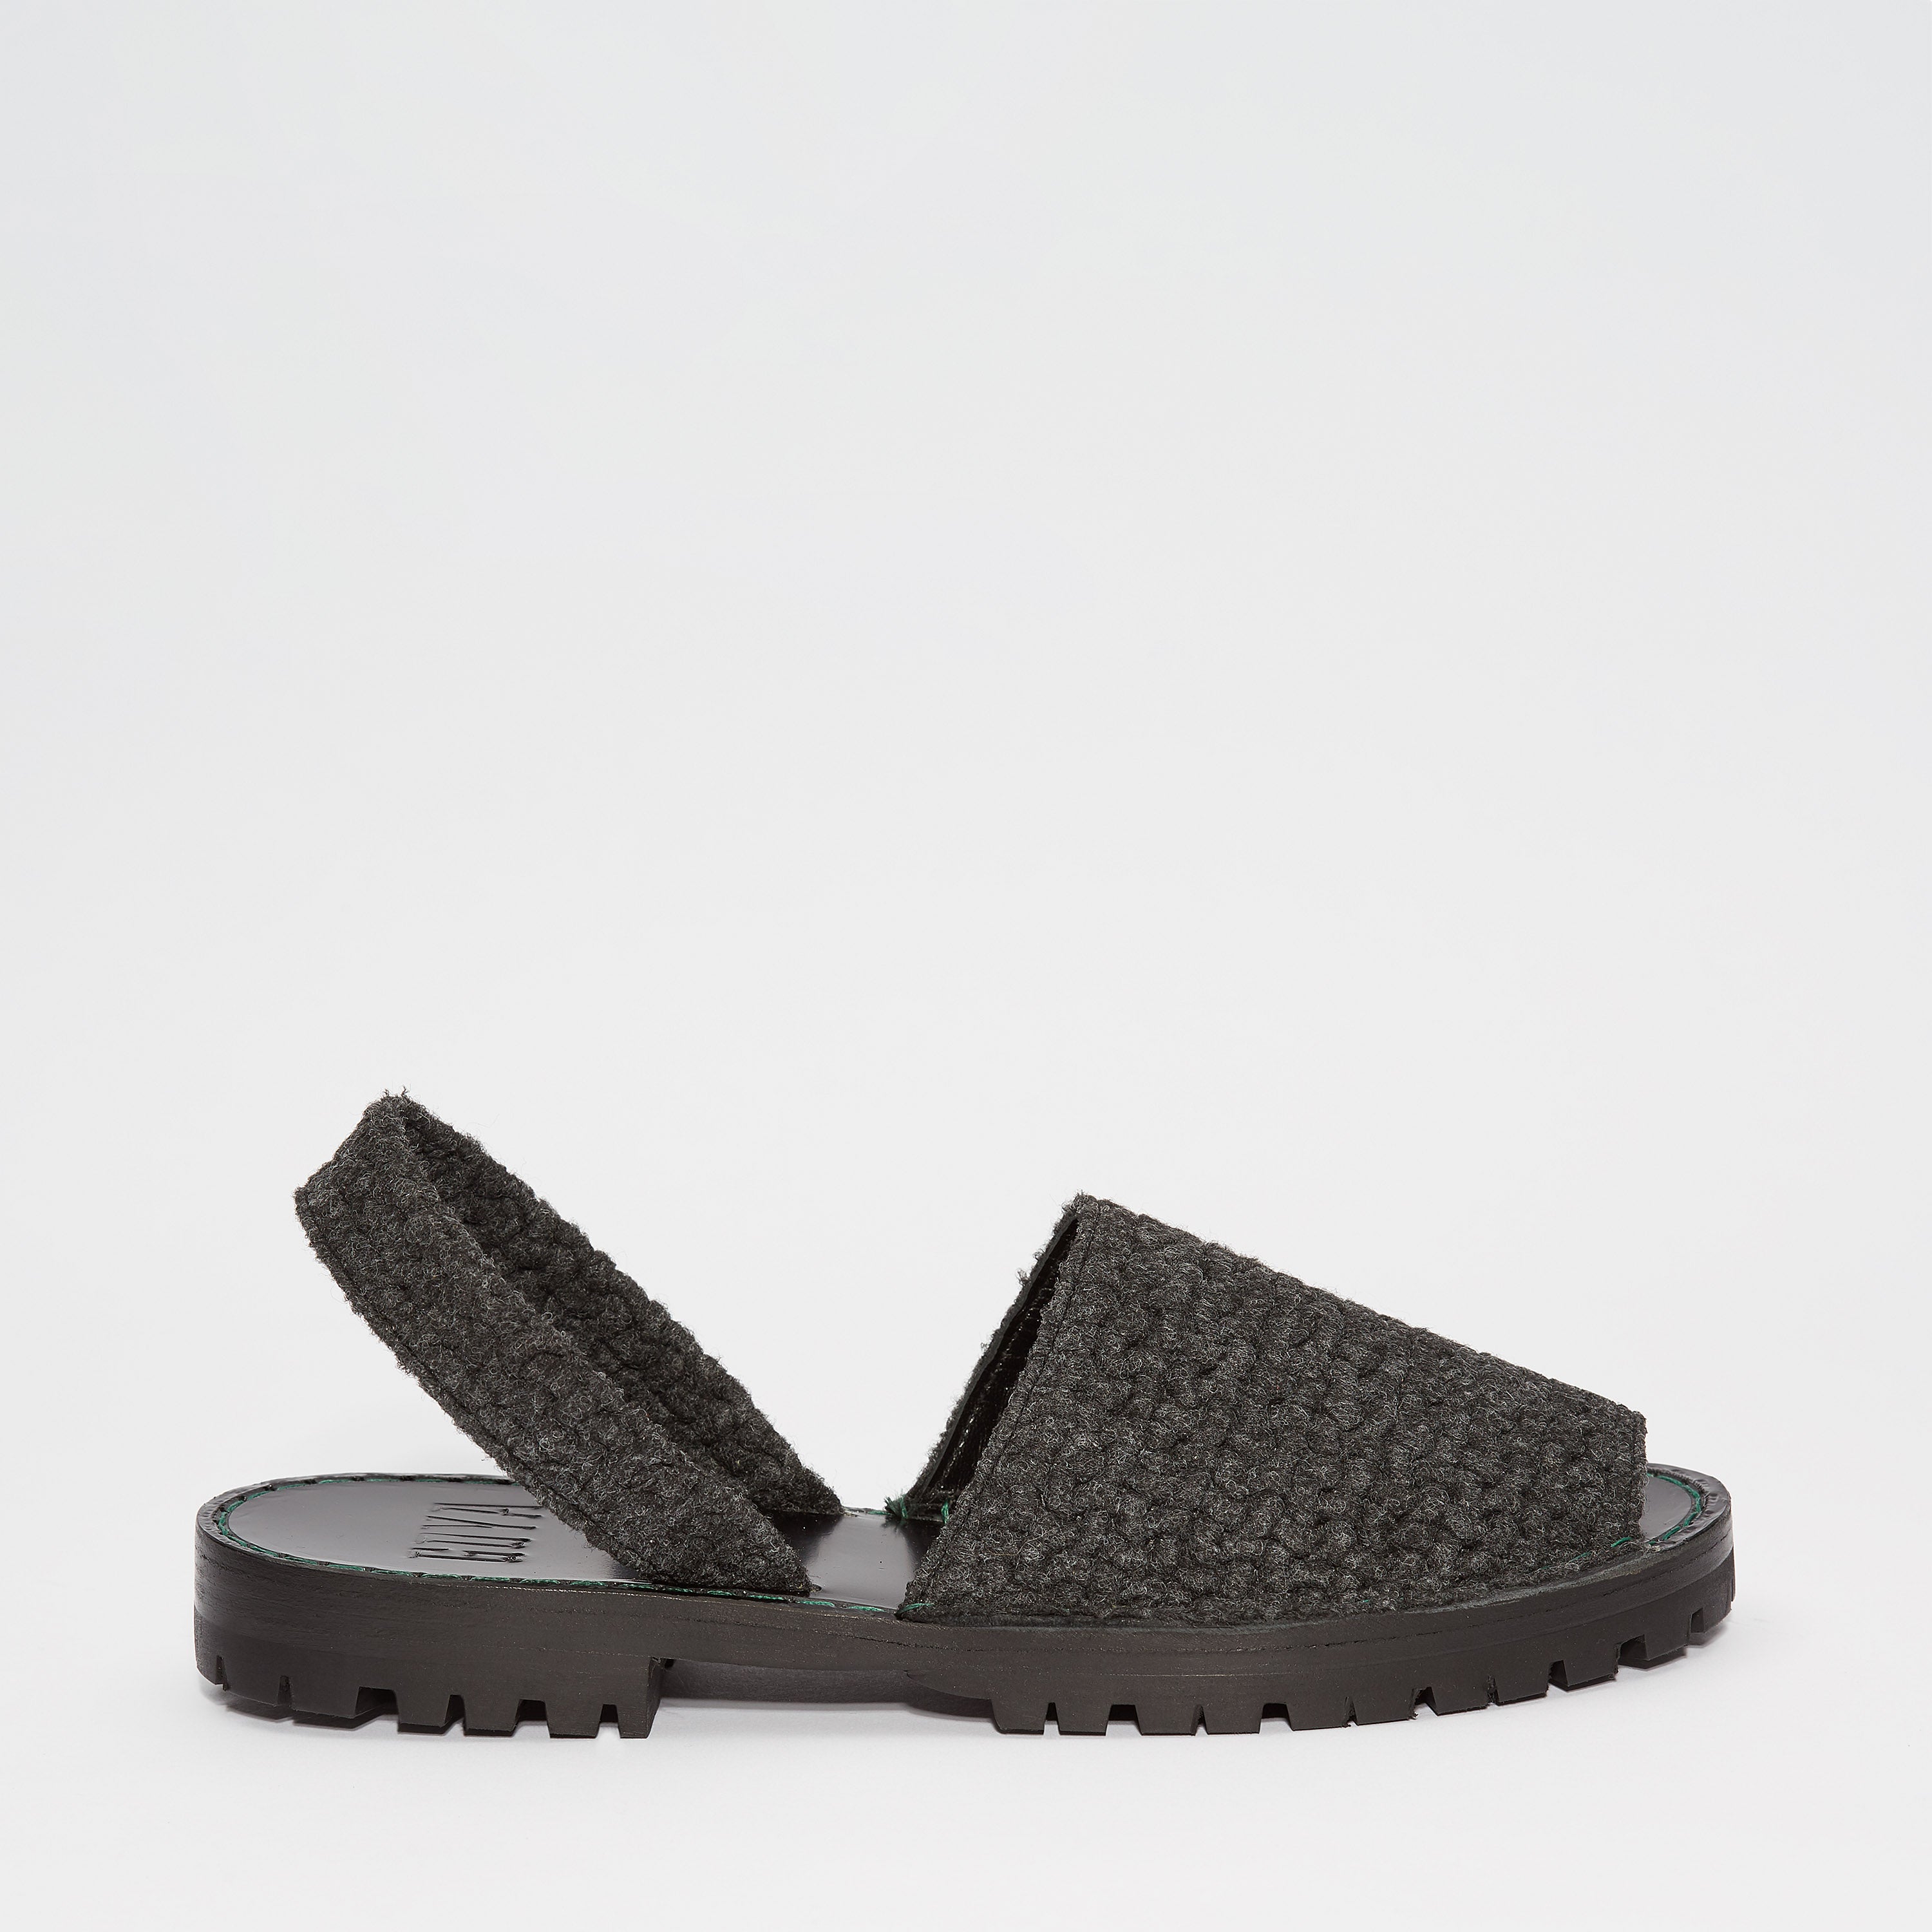 GOYA Women's Sandals - Carbon Grey Woven Felt Sandals